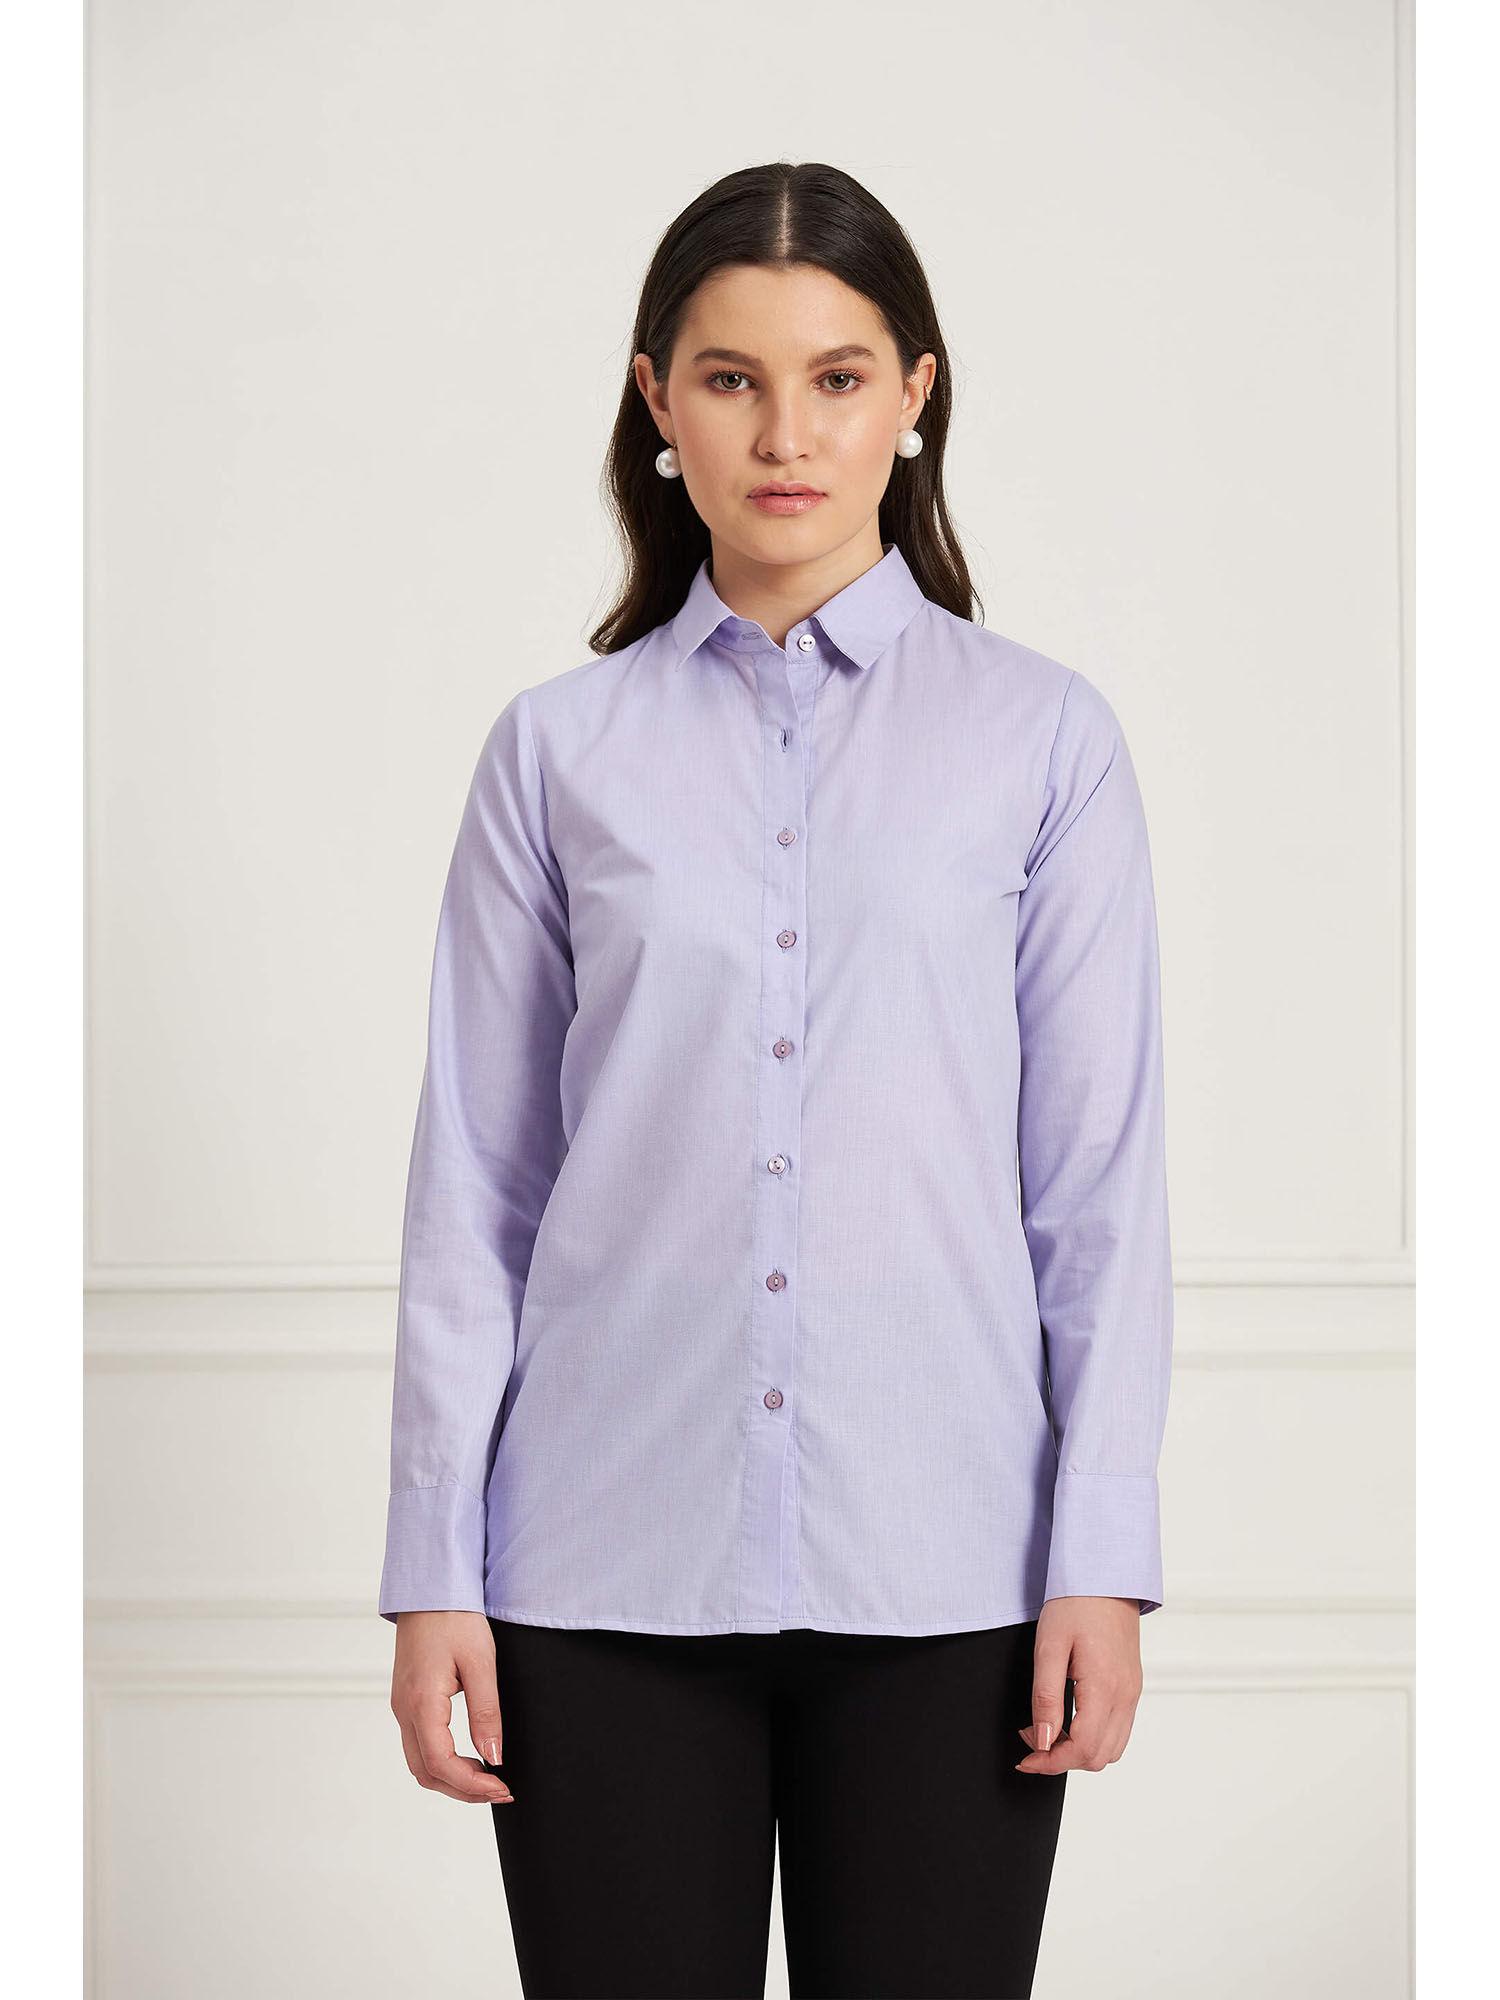 lavender button down shirt